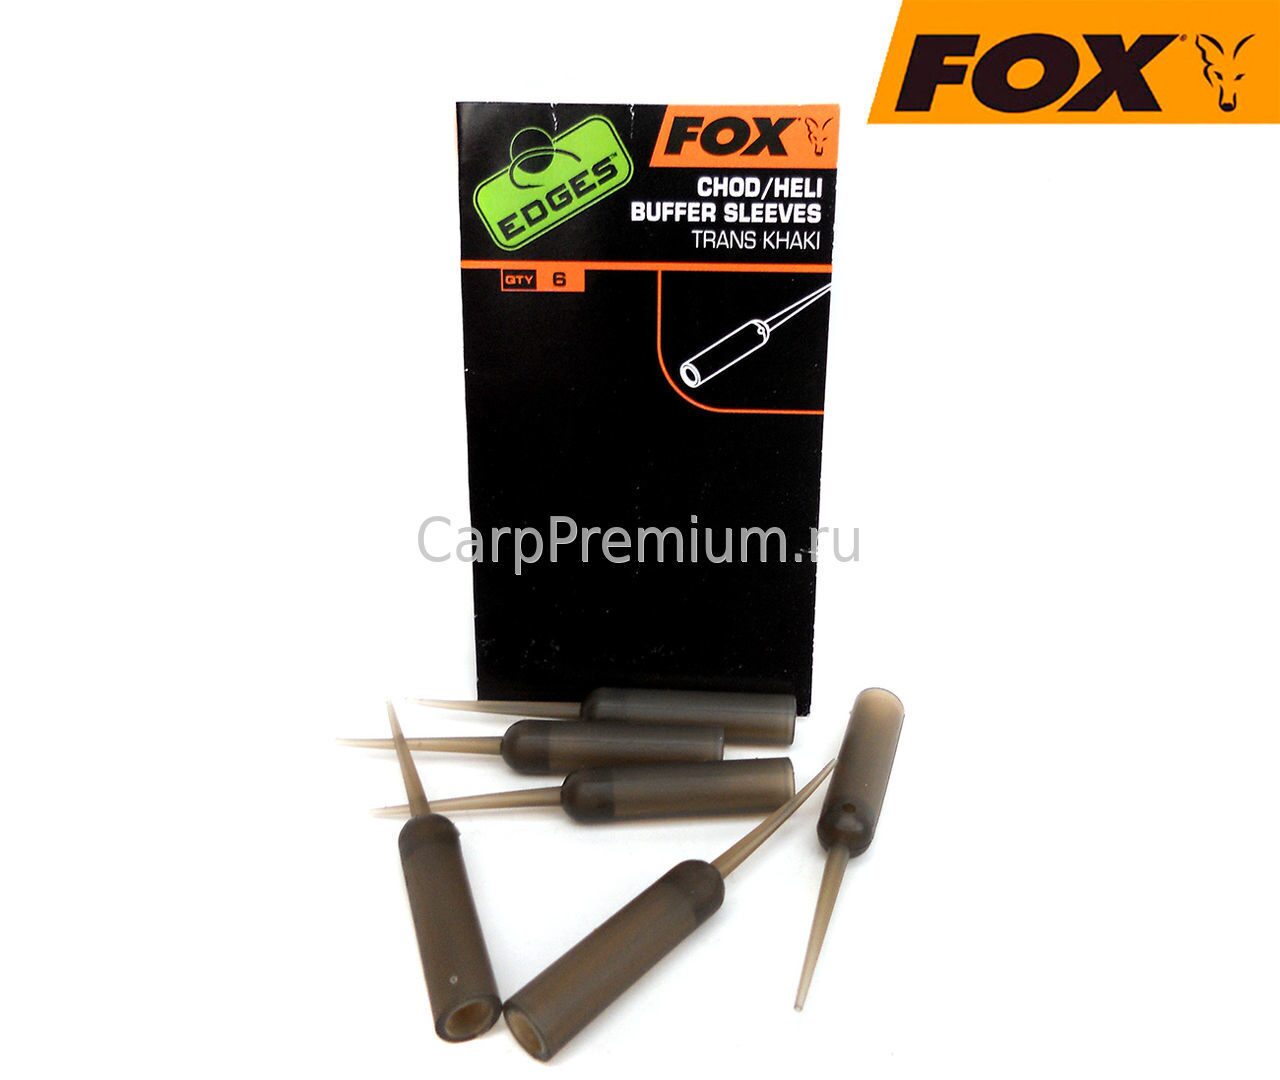 Буферные втулки для монтажей Fox (Фокс) - EDGES Chod/Heli Buffer Sleeves, 6 шт